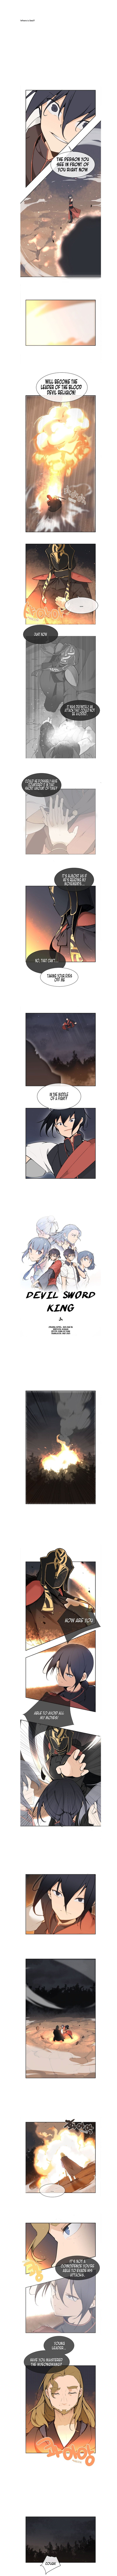 Devil Sword King Chapter 41 page 1